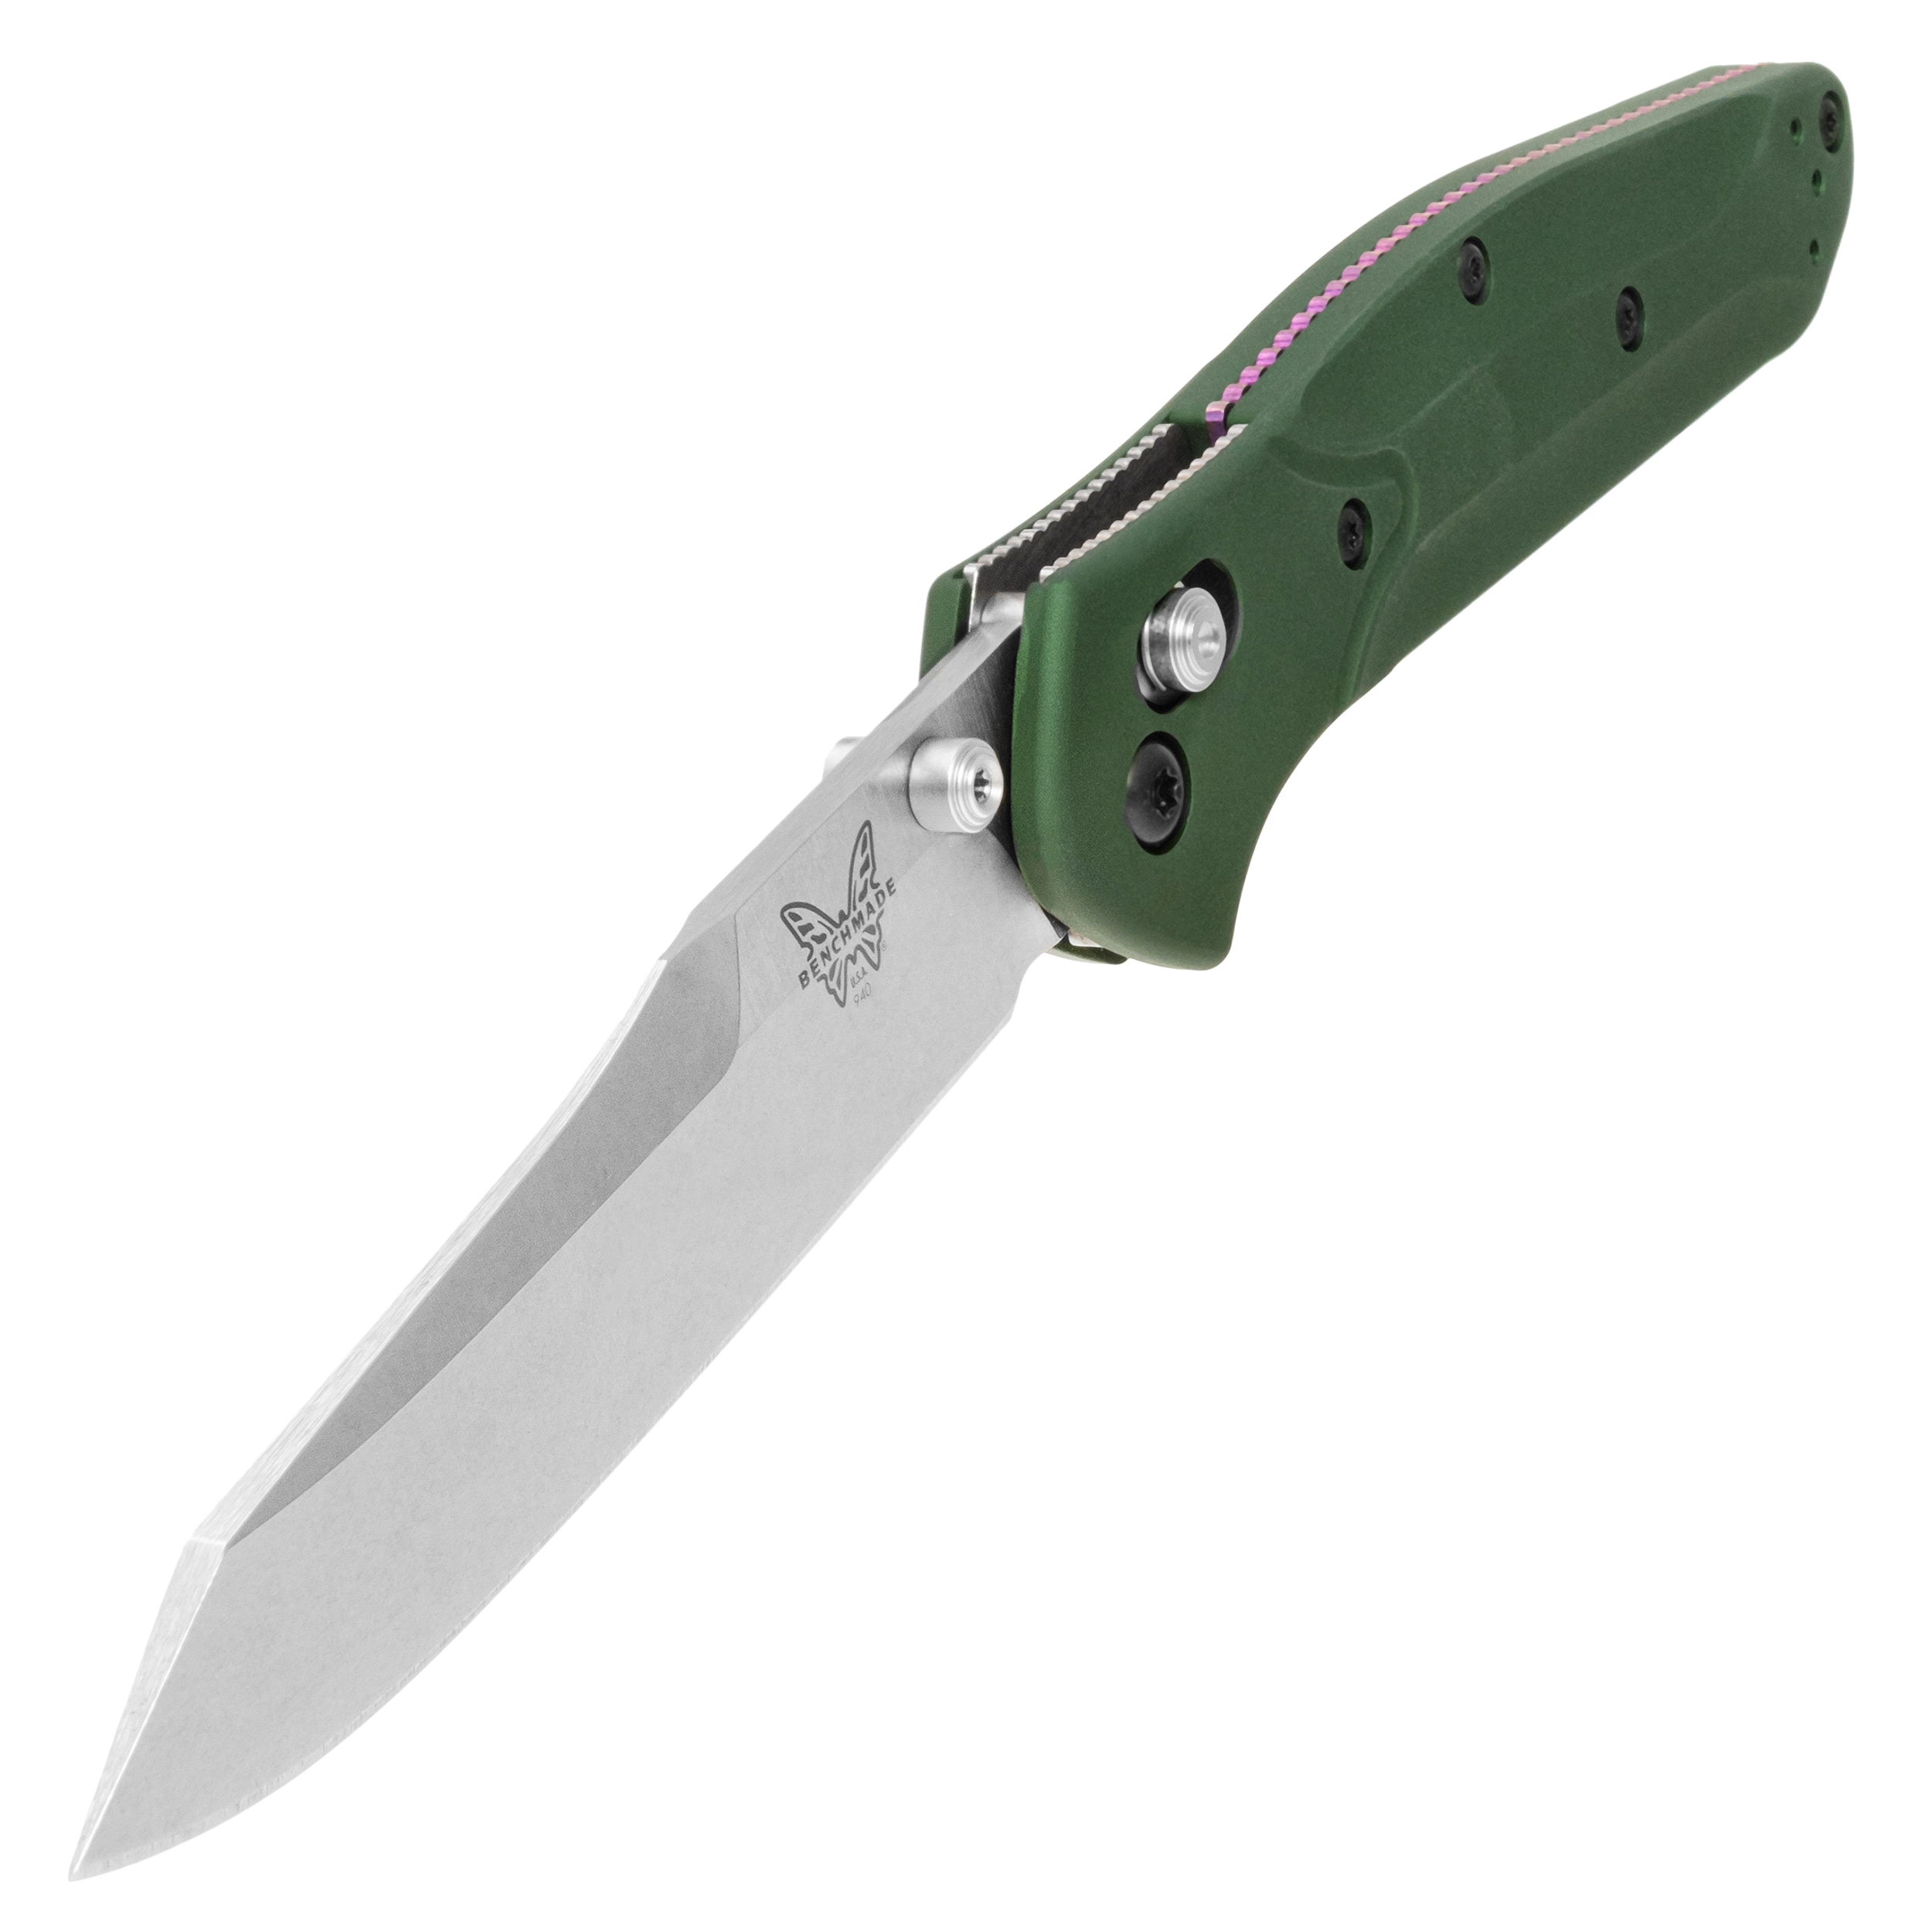 Nóż składany Benchmade Osborne CPM-S30V - Green Aluminium